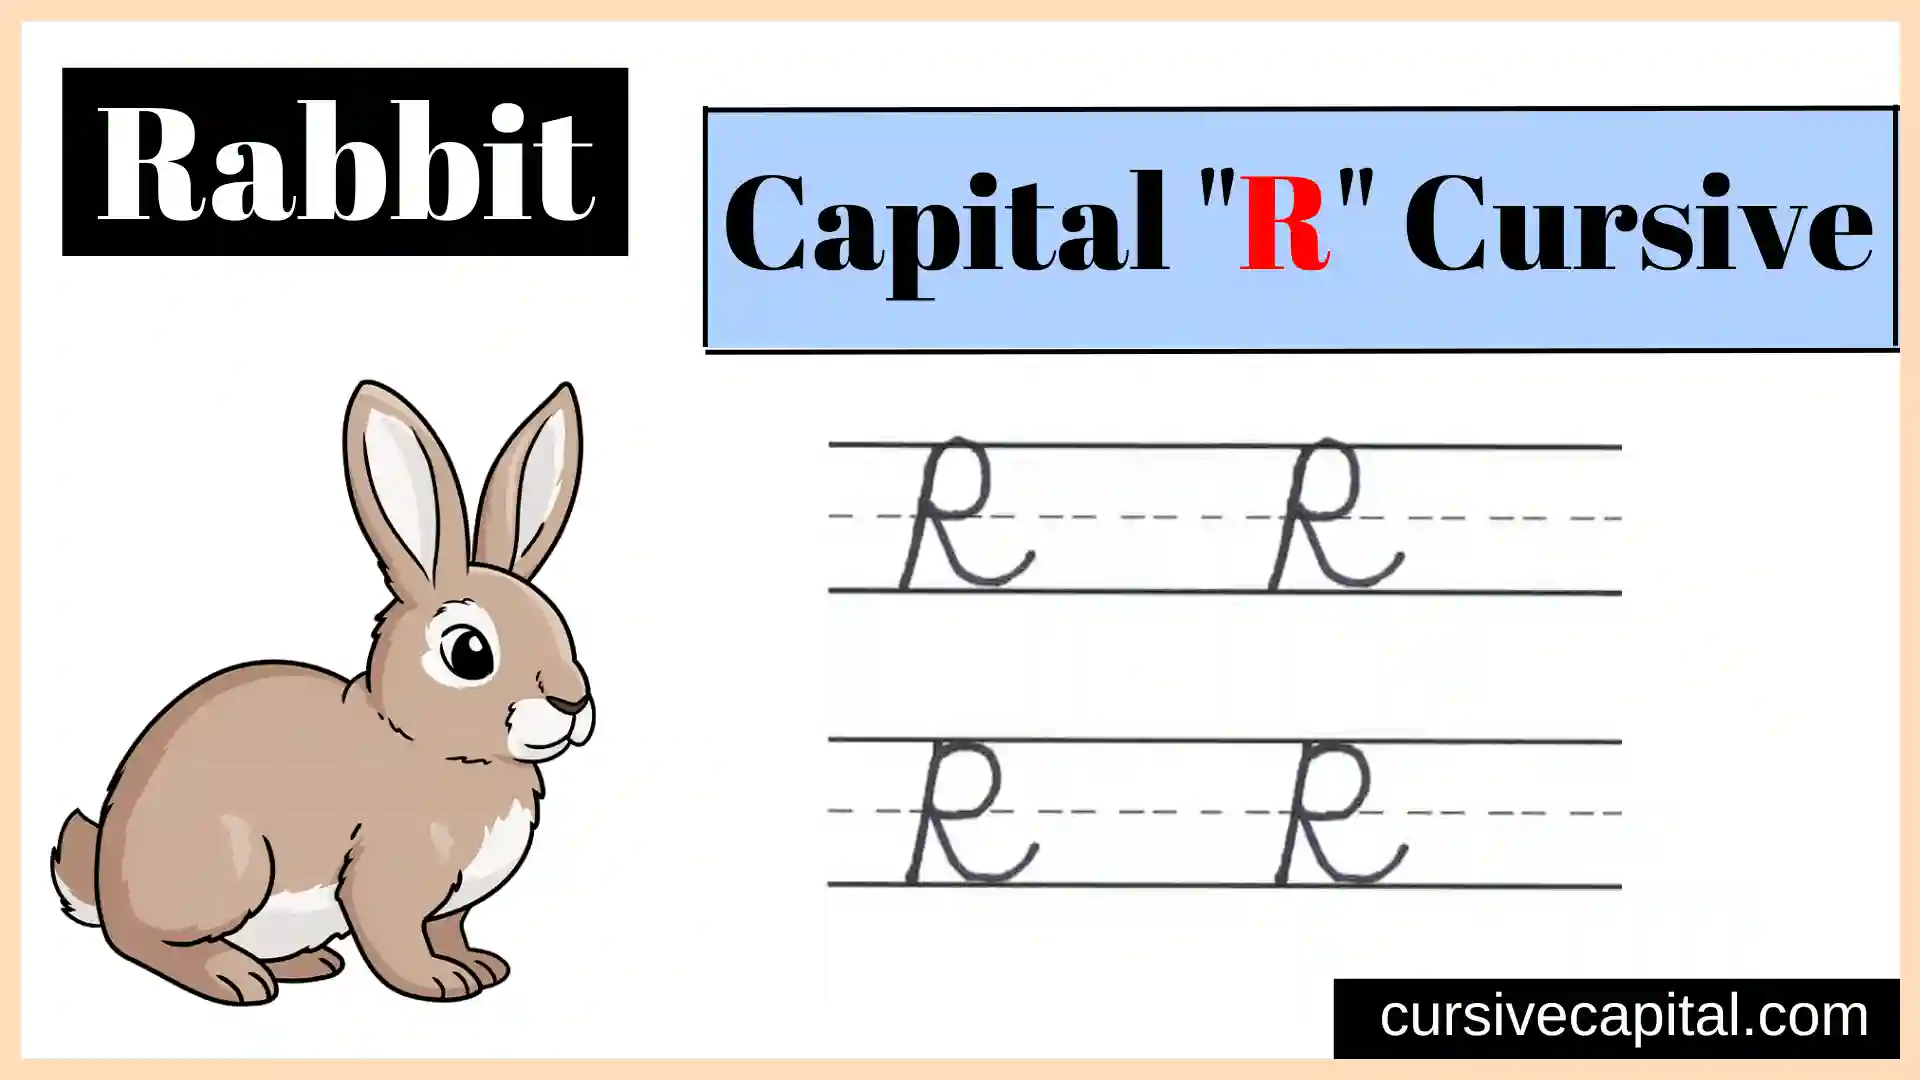 Capital R cursive